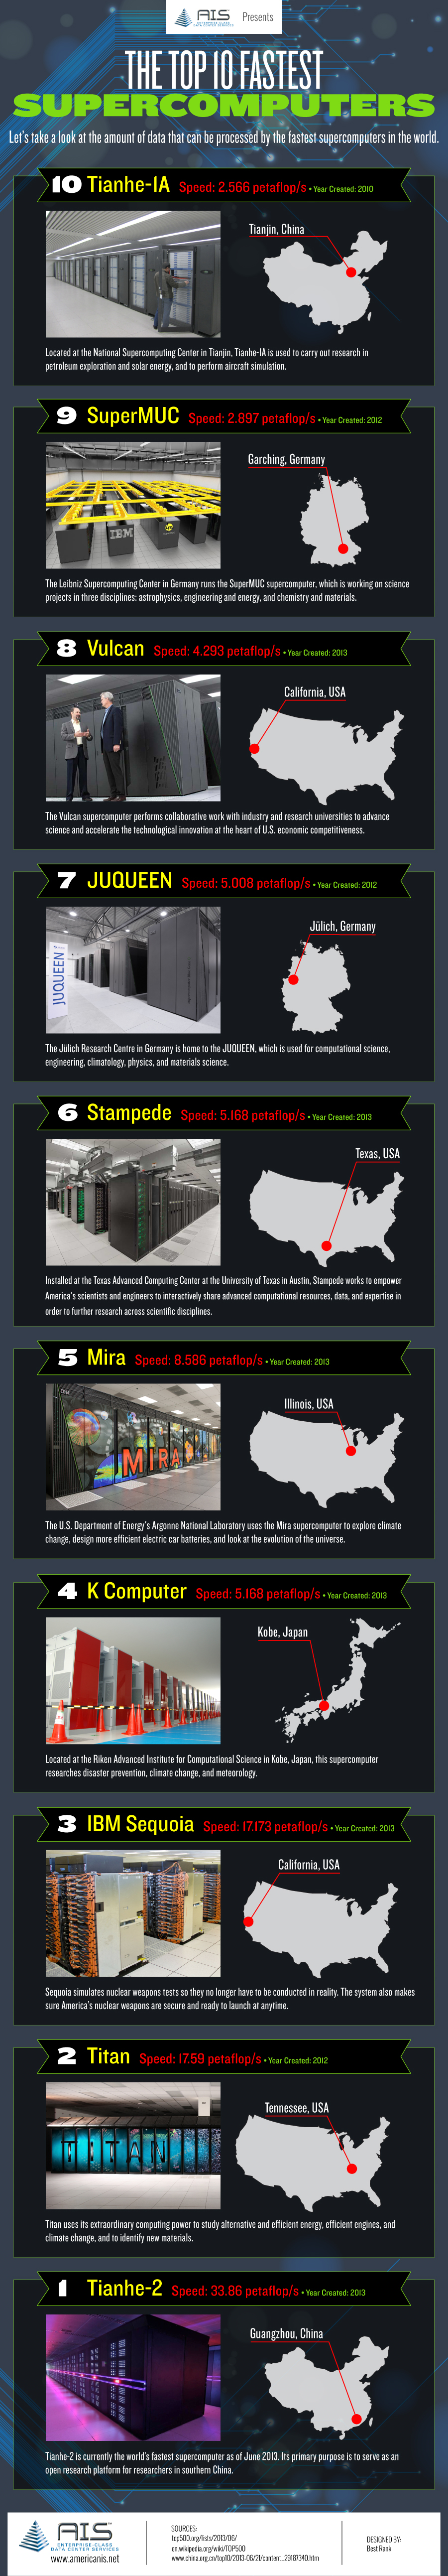 10 Fastest Supercomputers]